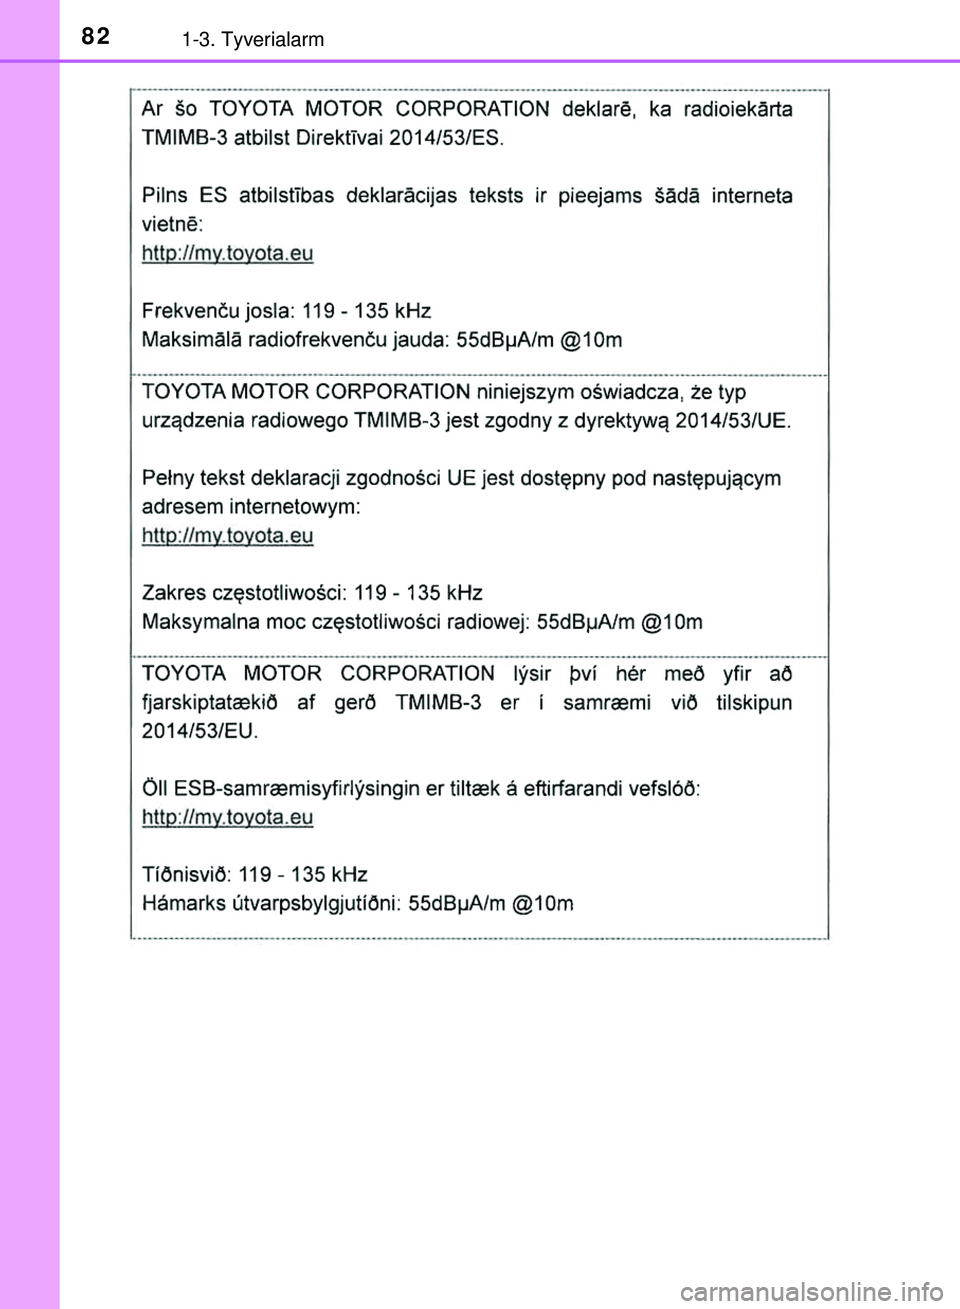 TOYOTA PRIUS PLUG-IN HYBRID 2018  Brugsanvisning (in Danish) 821-3. Tyverialarm
OM47C99DK
OM47C99DK.book  Page 82  Friday, August 10, 2018  11:20 AM 